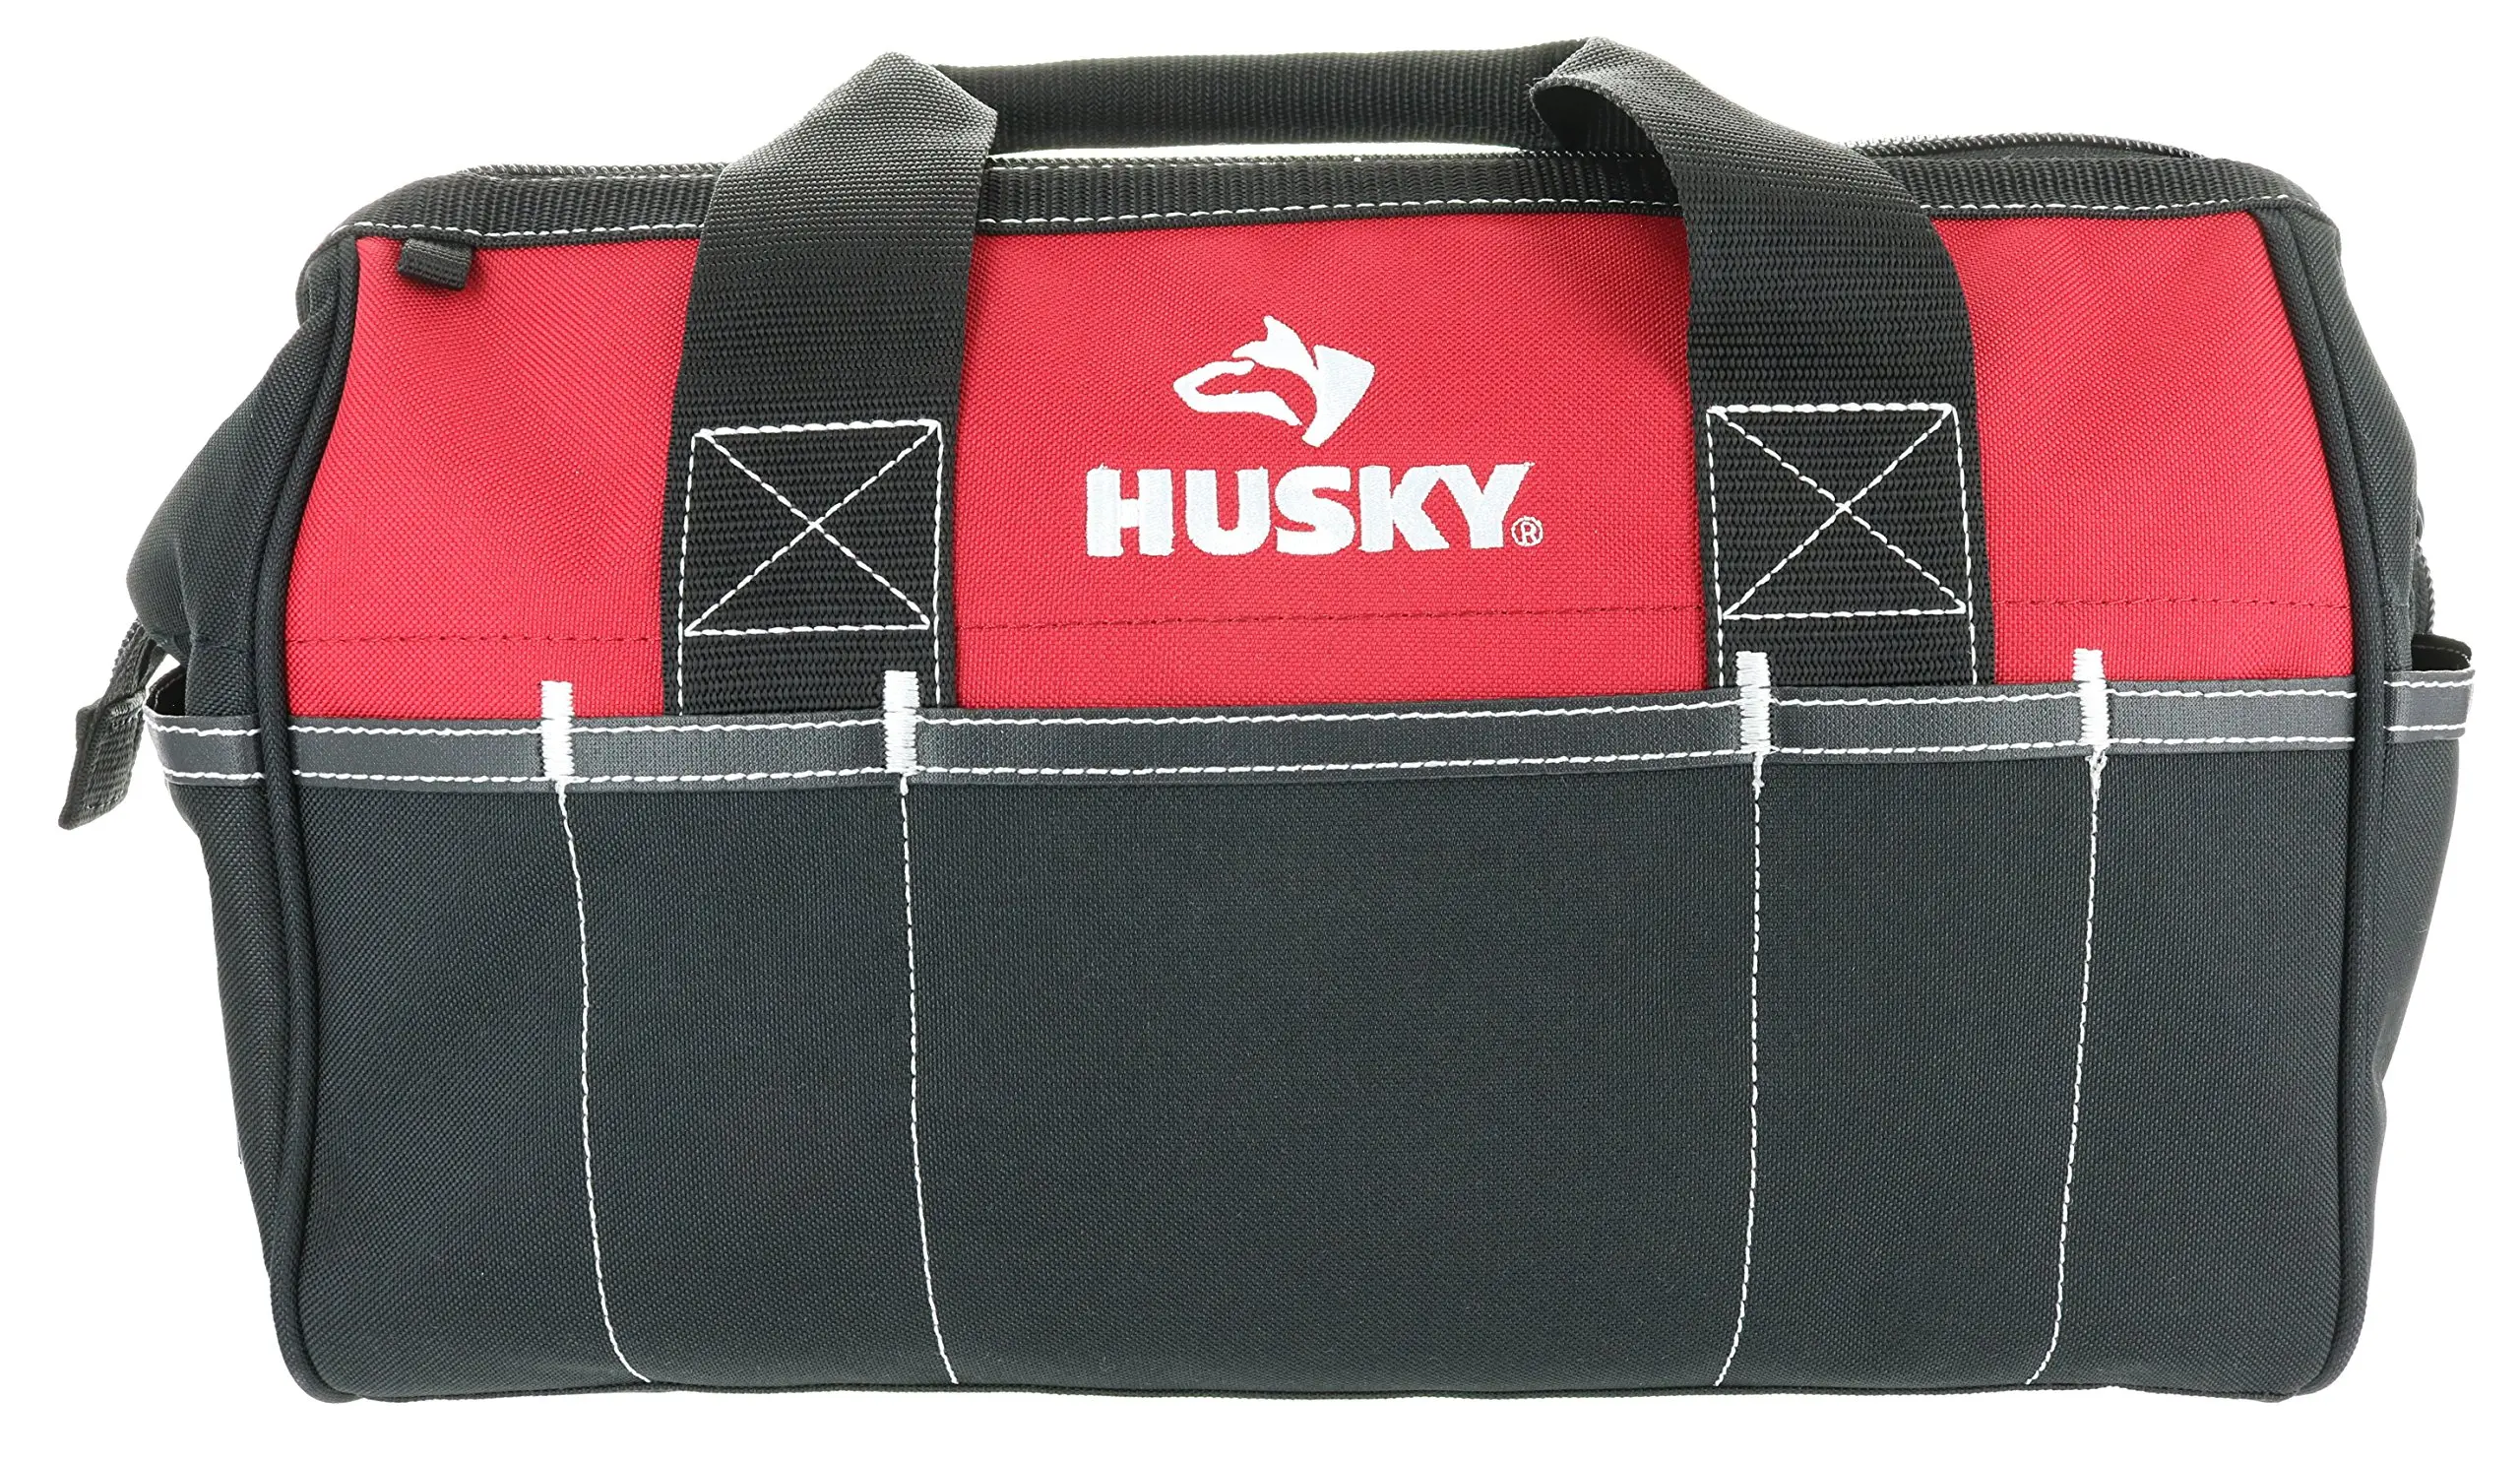 Cheap Husky Tool Bag, find Husky Tool Bag deals on line at Alibaba.com